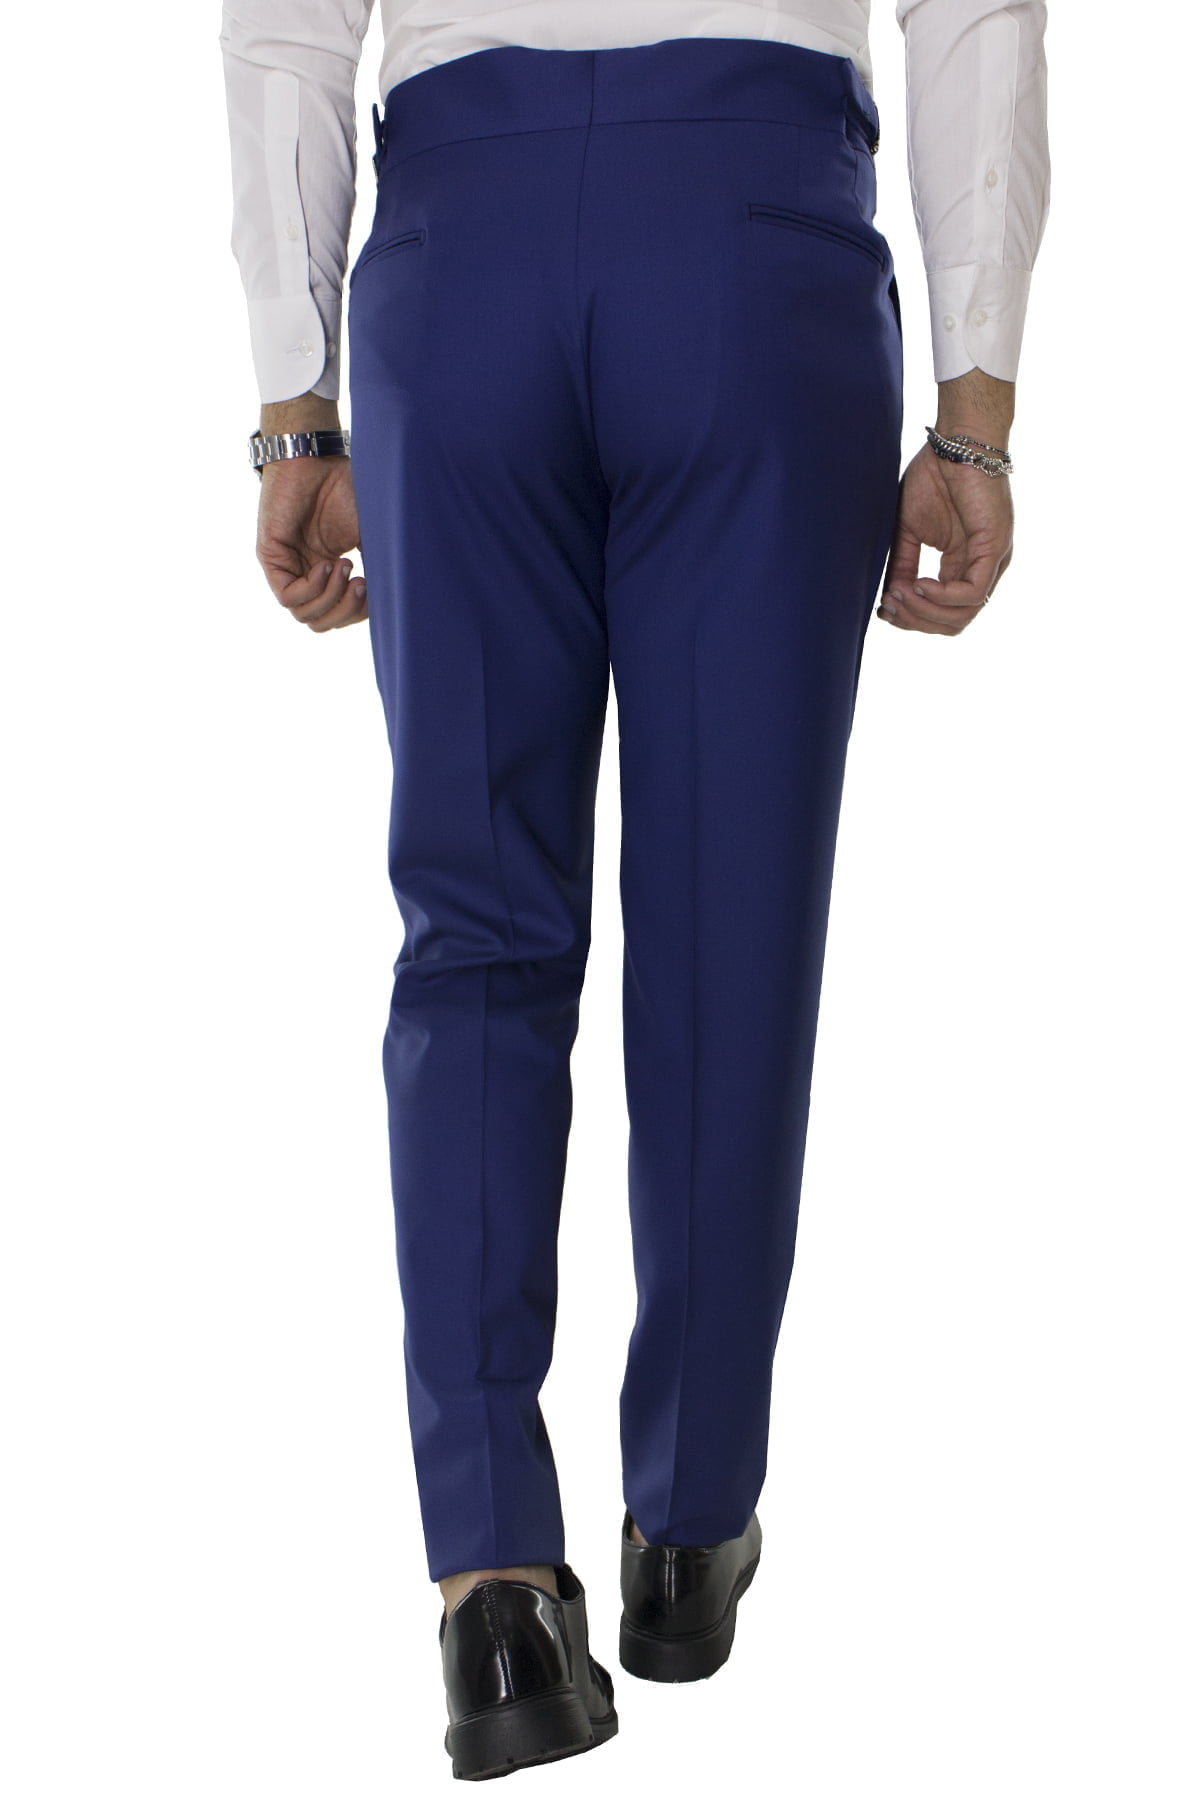 Pantalone uomo royal in fresco lana super140s vita alta con pinces e fibbie laterali Holland & Sherry